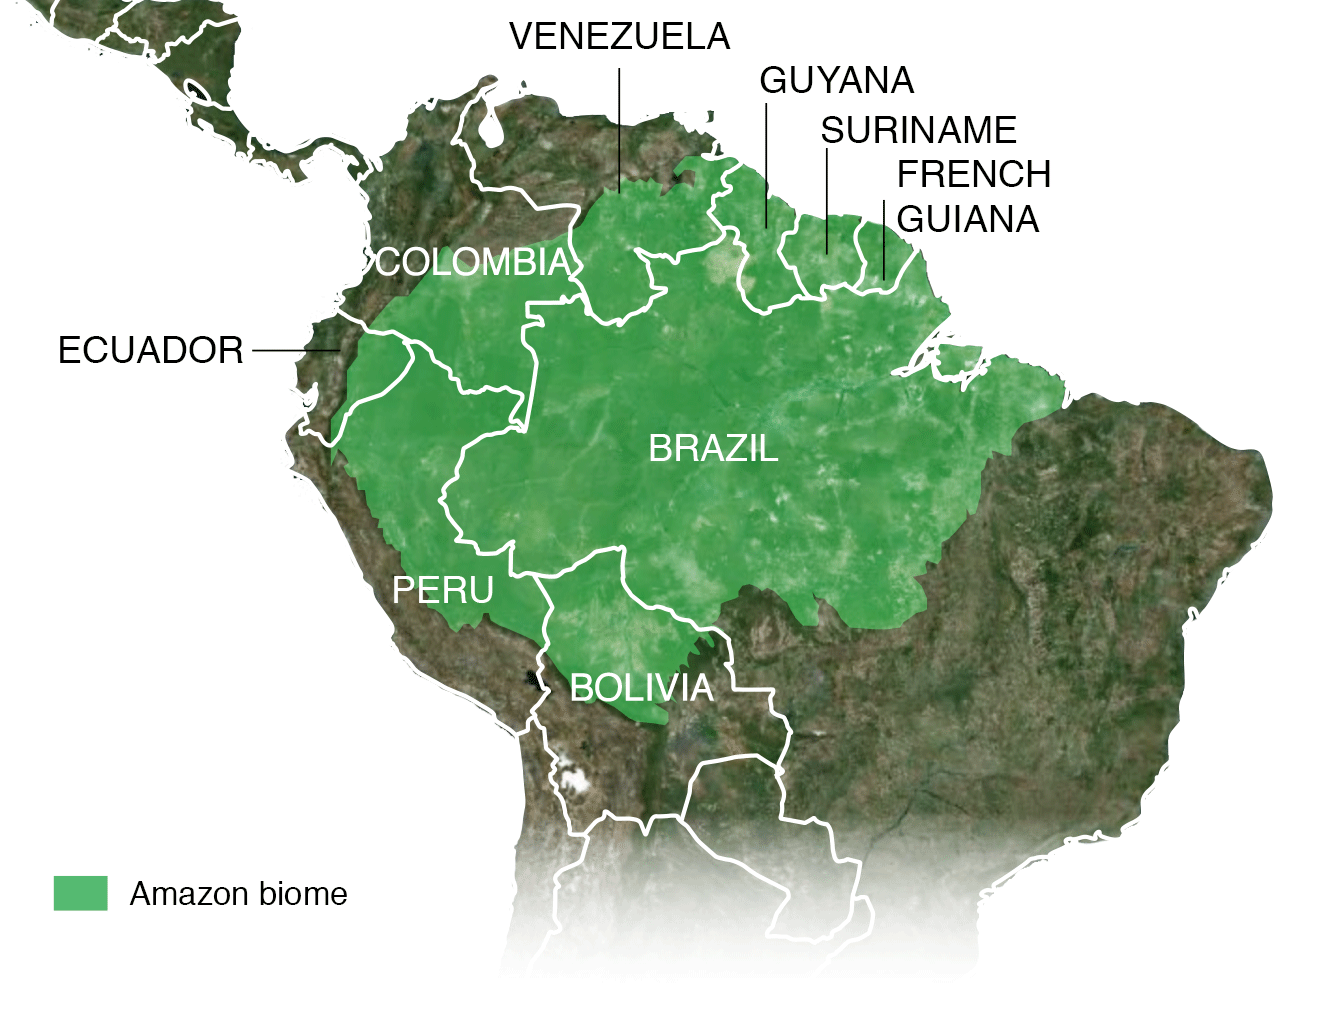 Map of Amazon biome including Peru, Bolivia, Ecuador, Colombia, Guyana